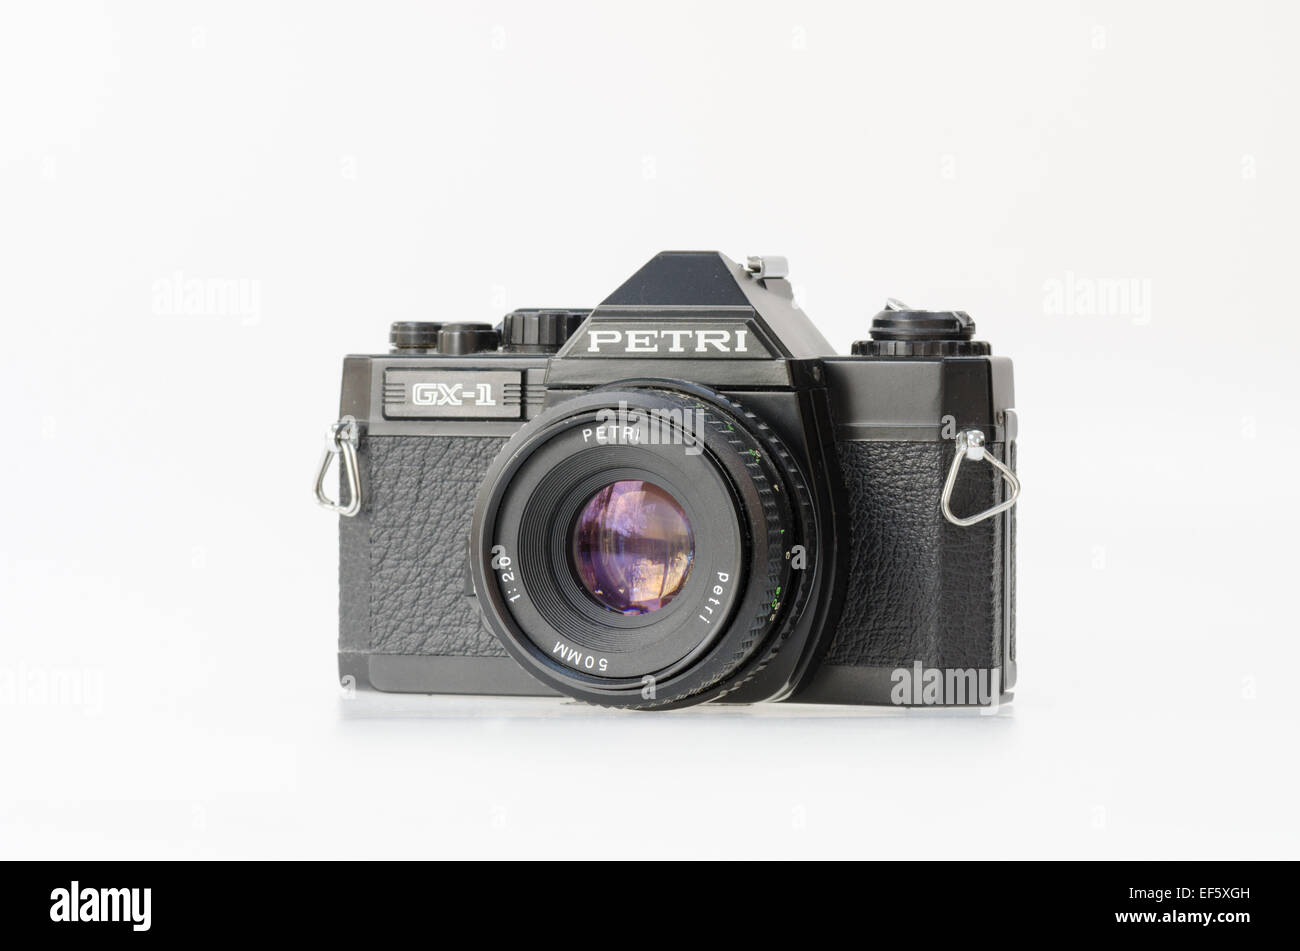 Black Petri GX-1 35mm film slr camera Stock Photo